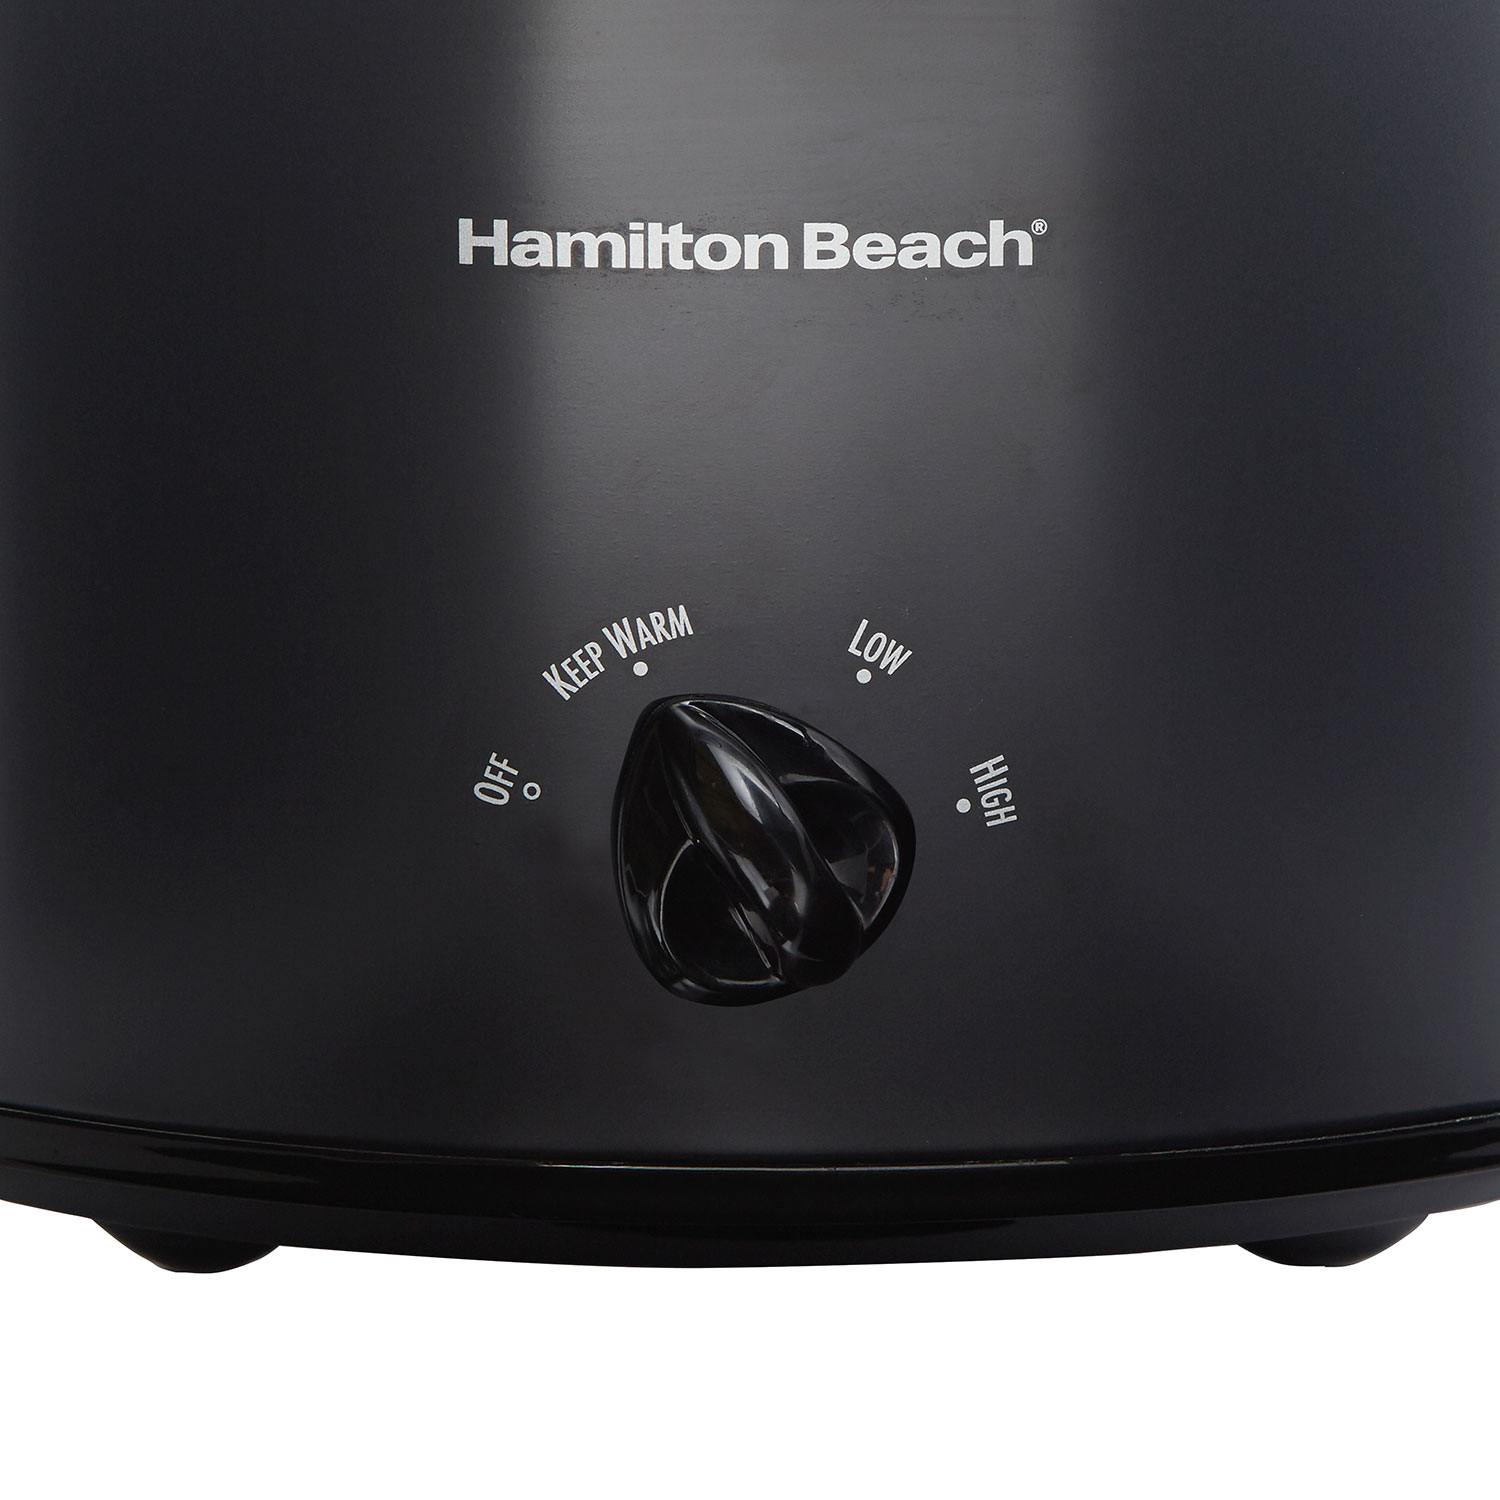 Hamilton Beach 3-Quart Slow Cooker With Dishwasher-Safe Crock & Lid, Matte  Black (33231)